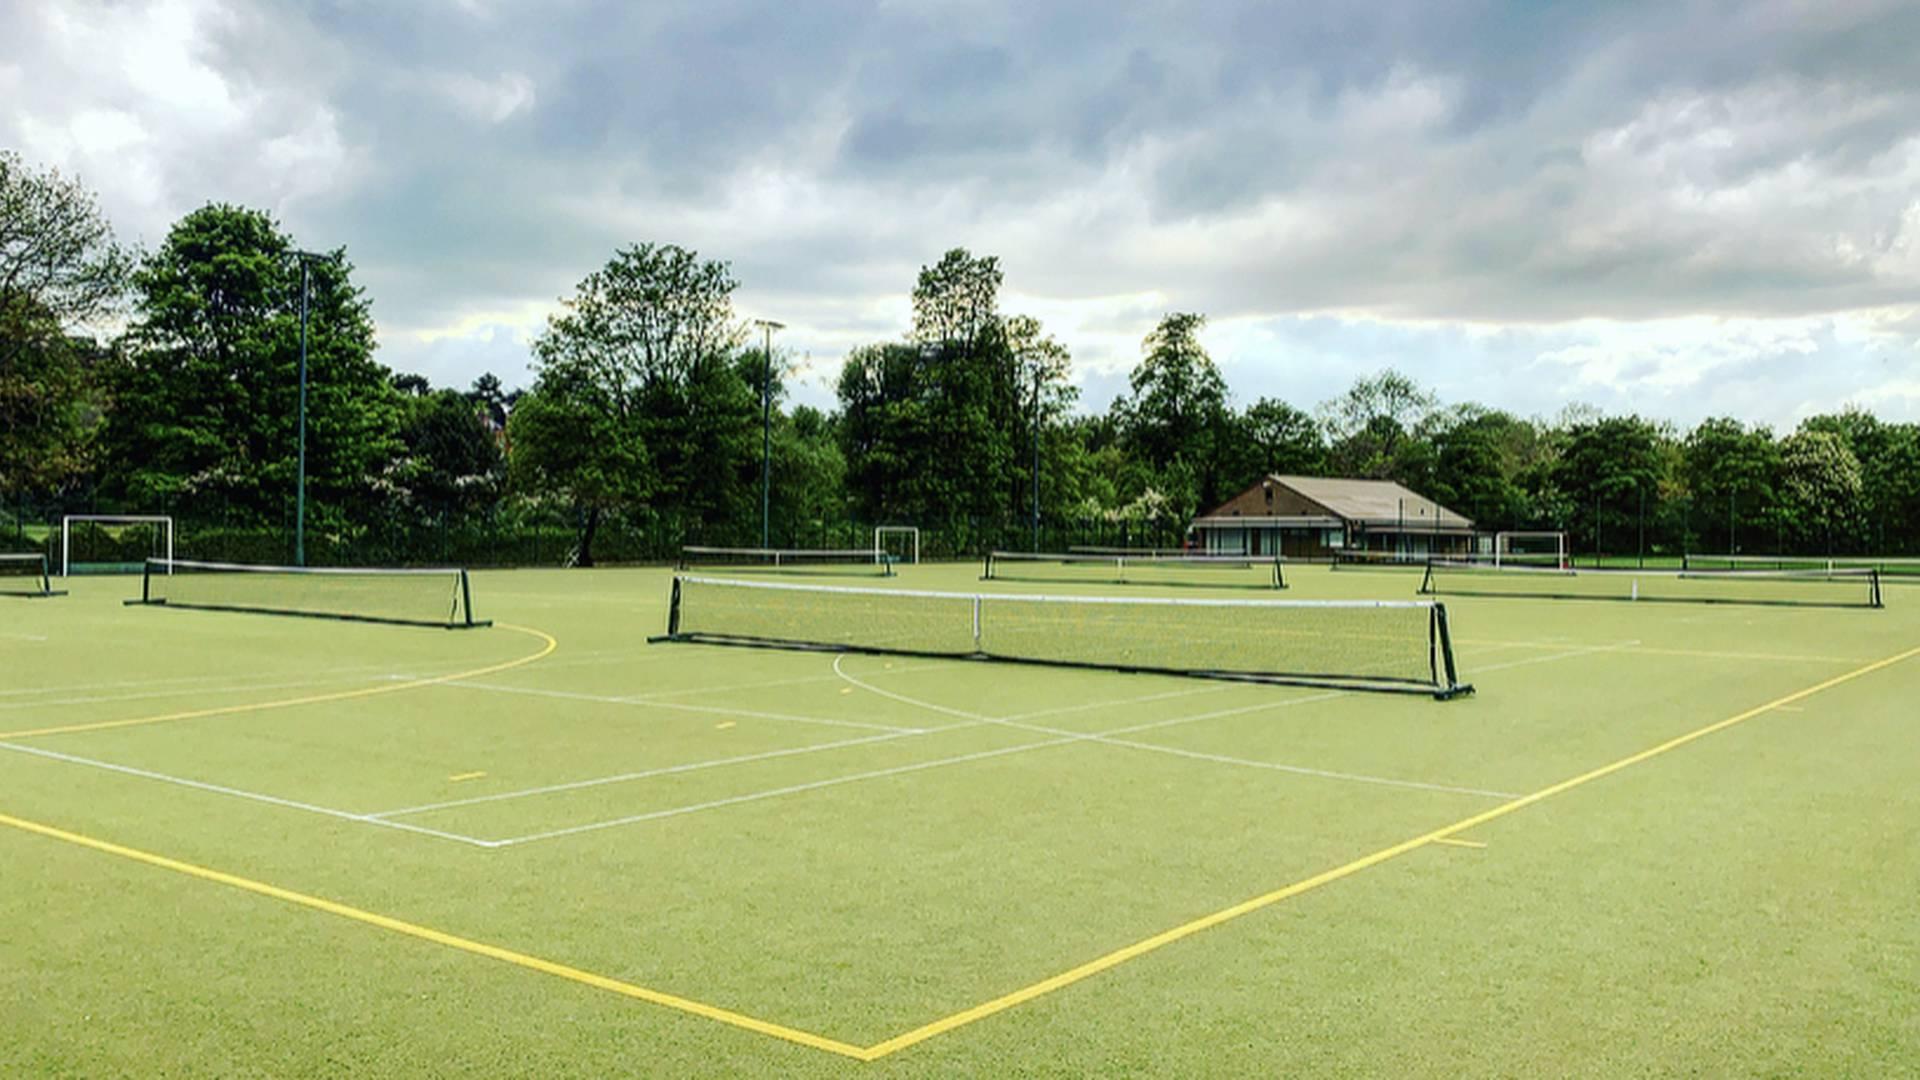 The Tennis Camp photo